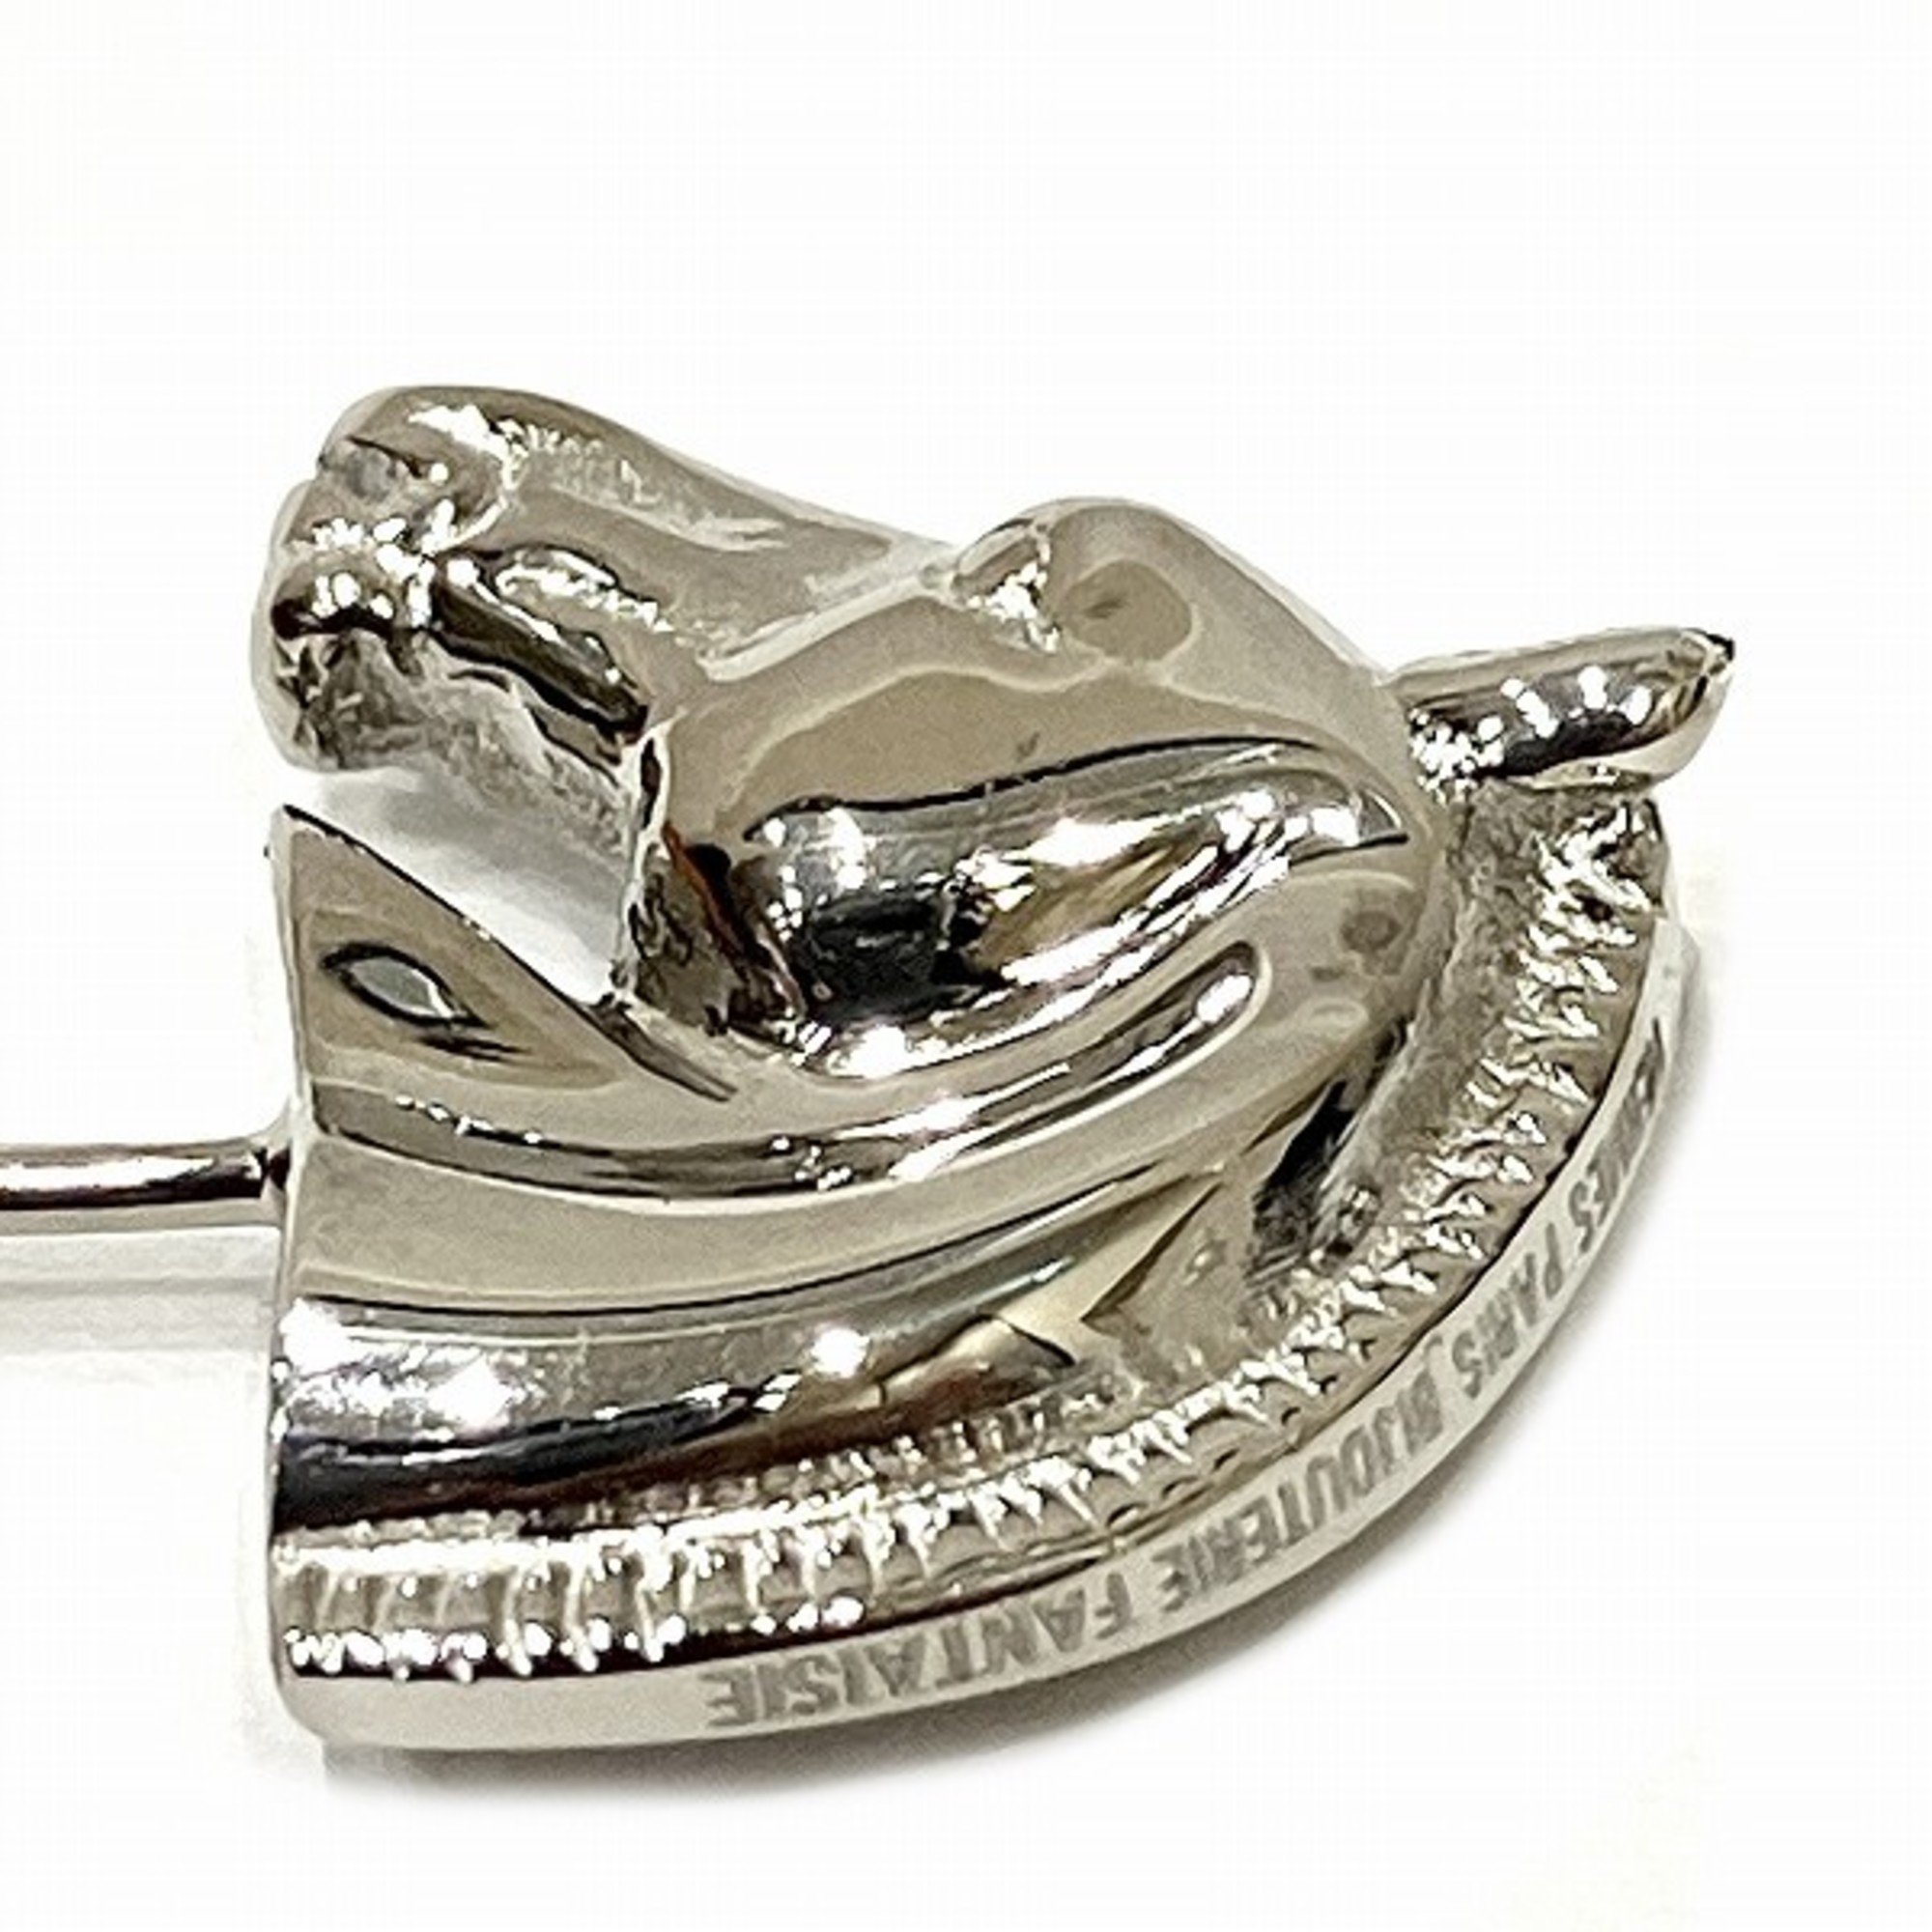 Hermes Horse Motif Pin Brooch Brand Accessories Unisex